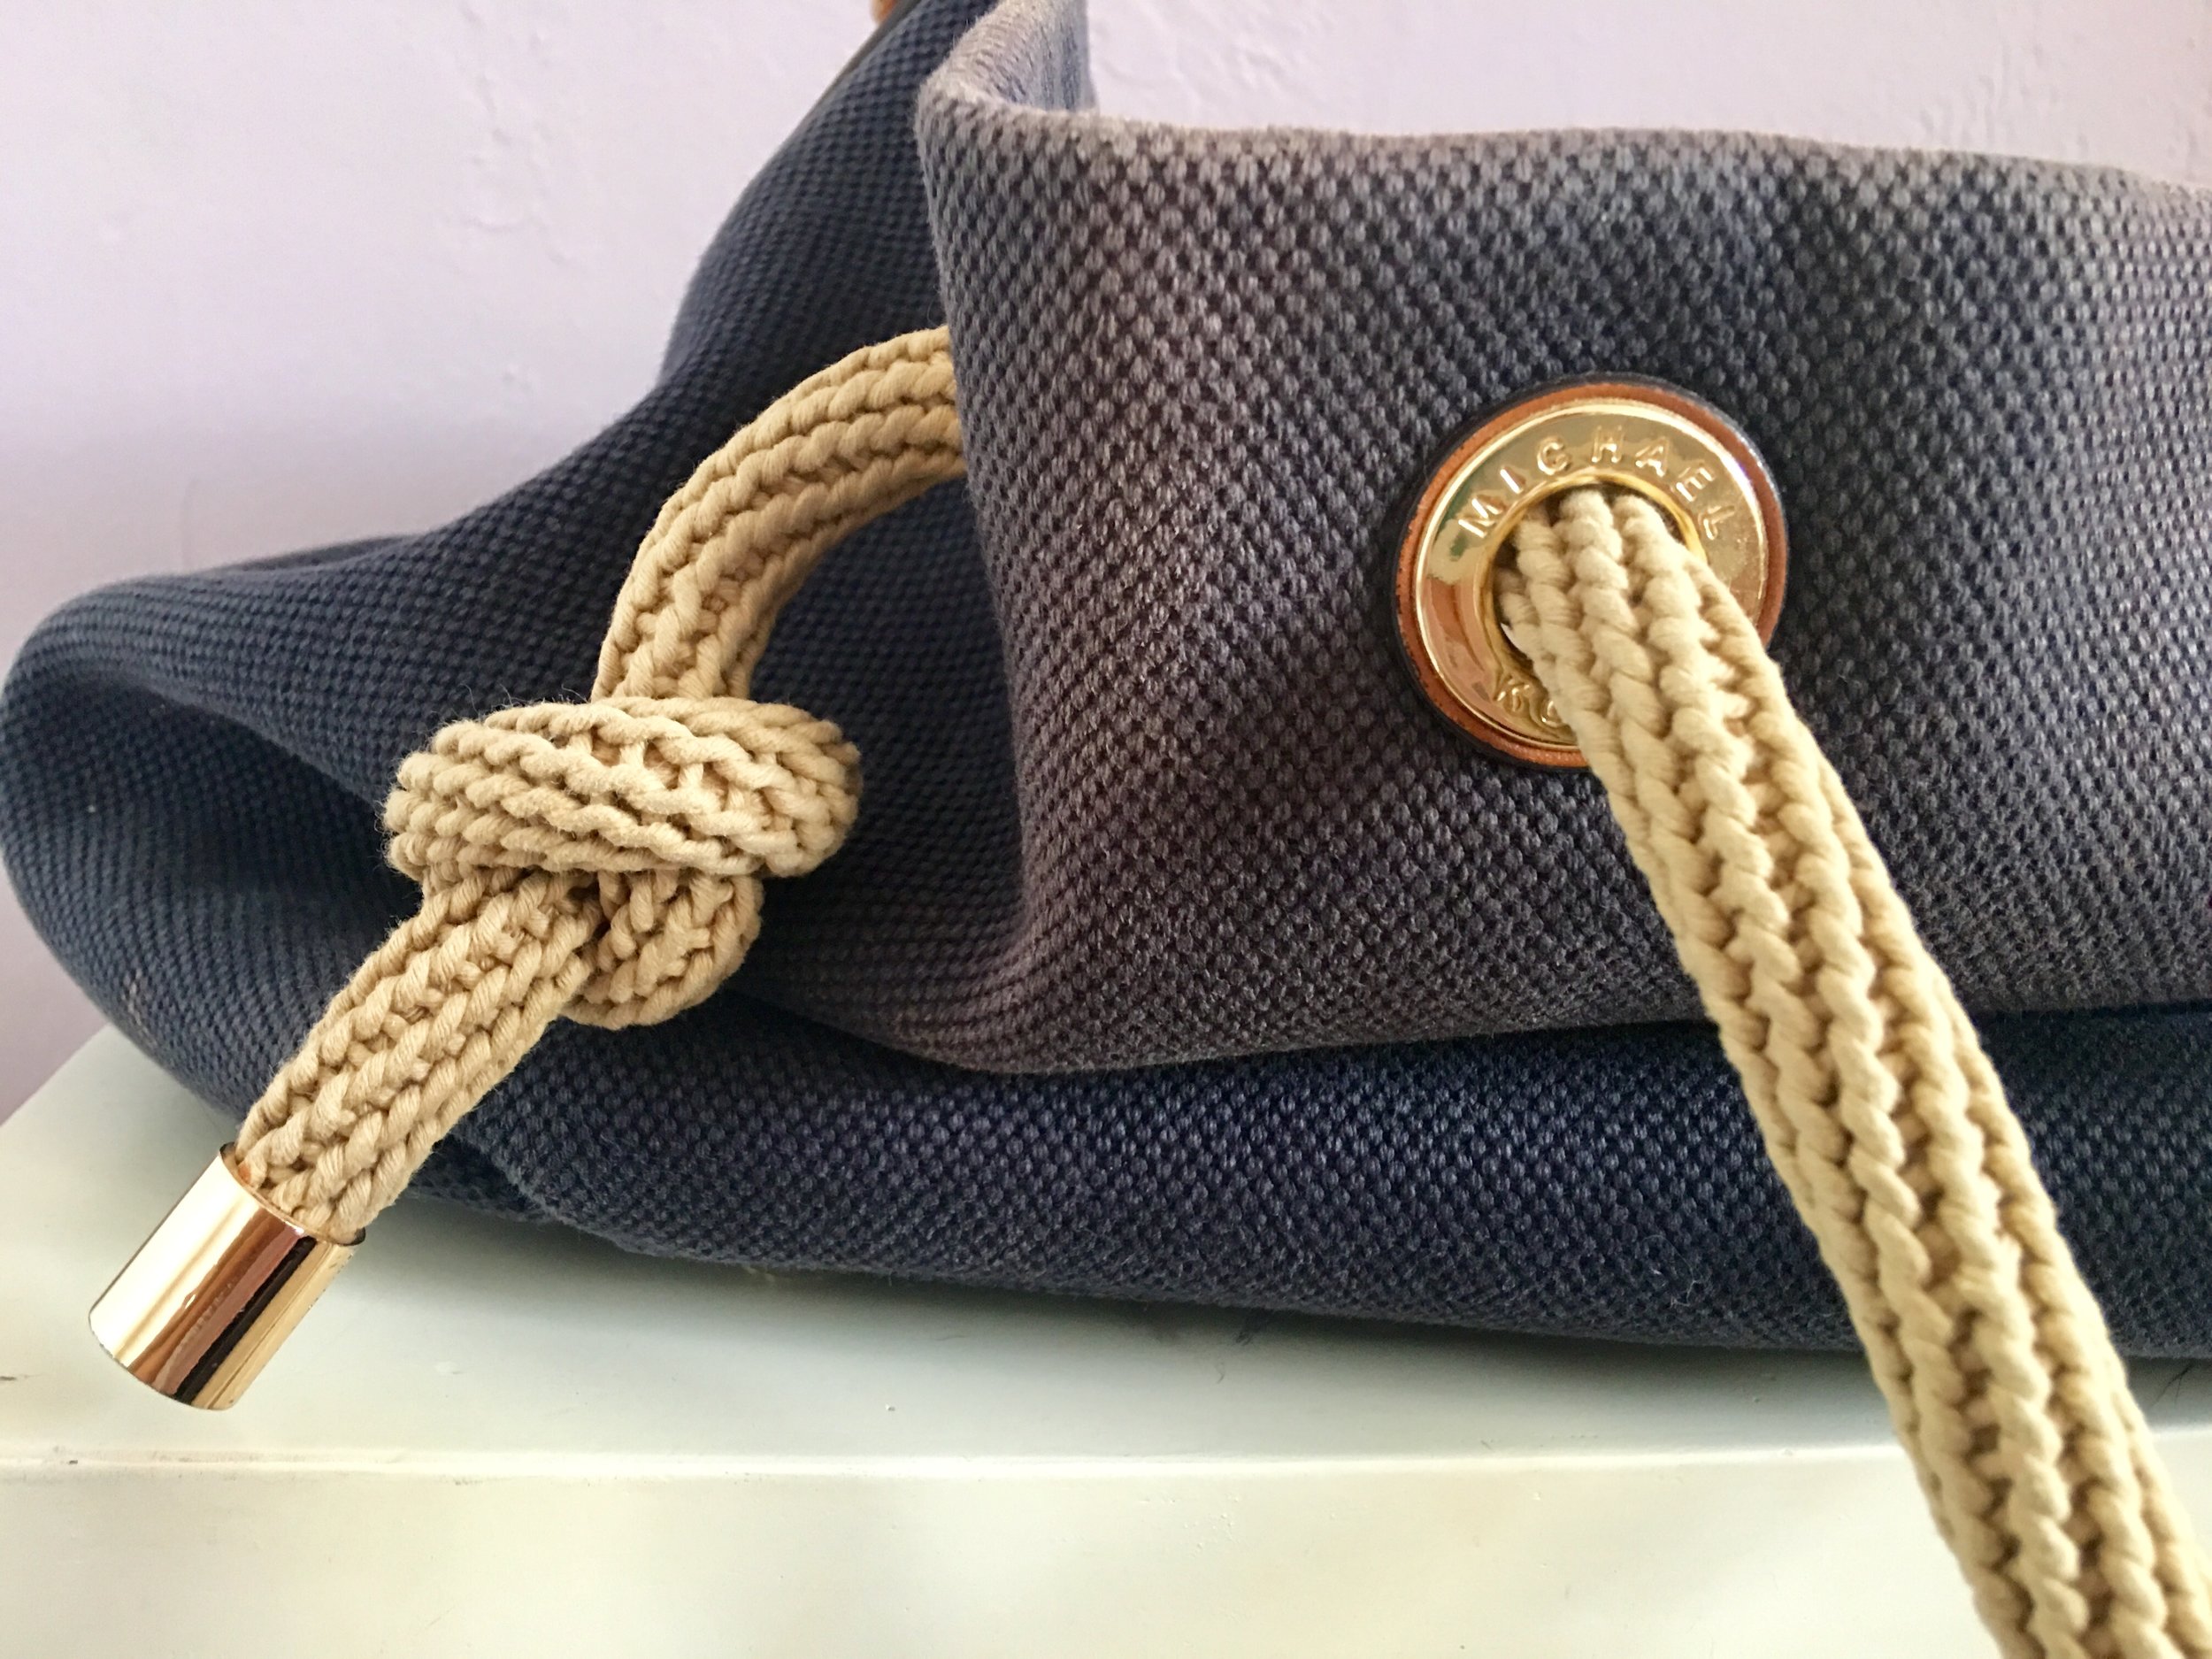 michael kors bag with rope handles